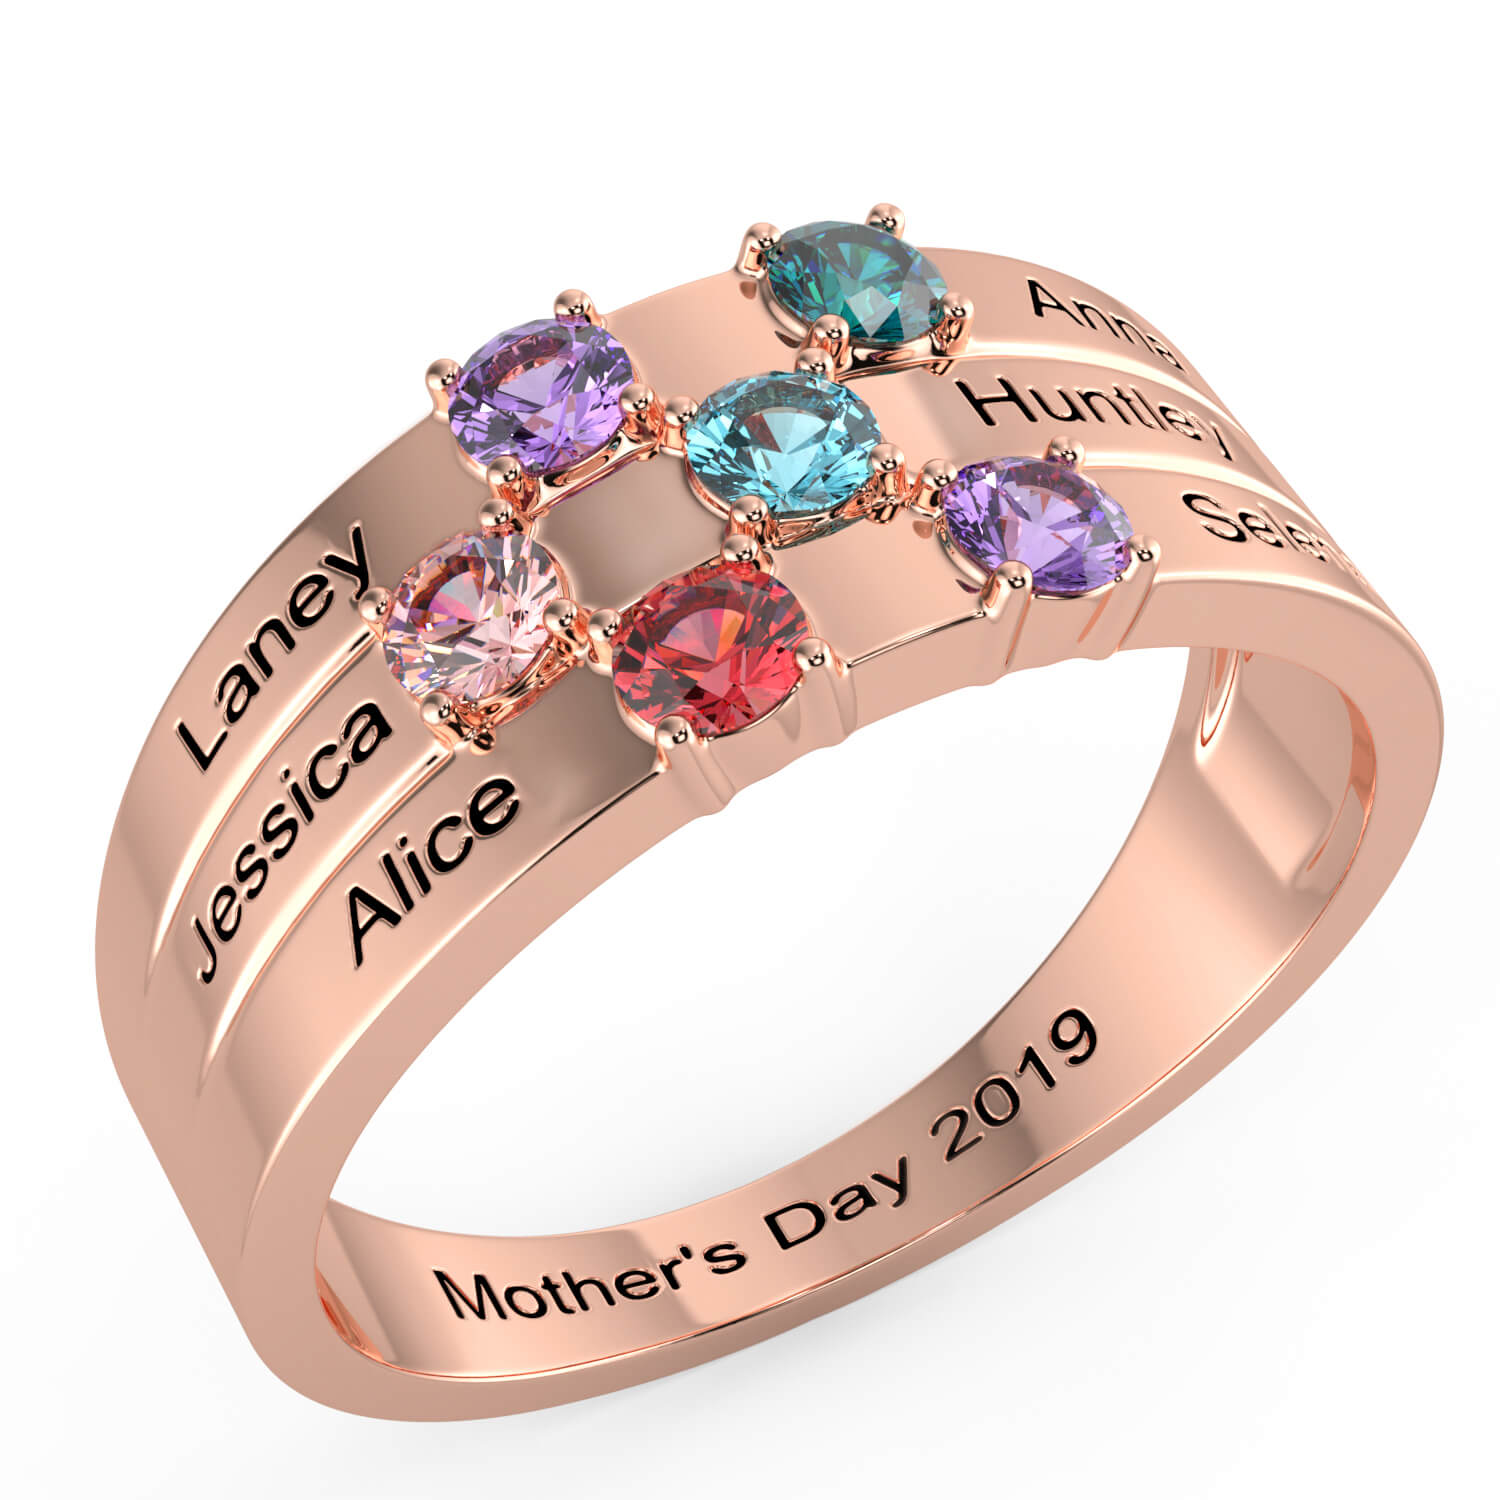 Mother's Day Ring Jewelry Sterling SILVER Birthstone V Ring 1-5 Stones, Mom  ring | eBay